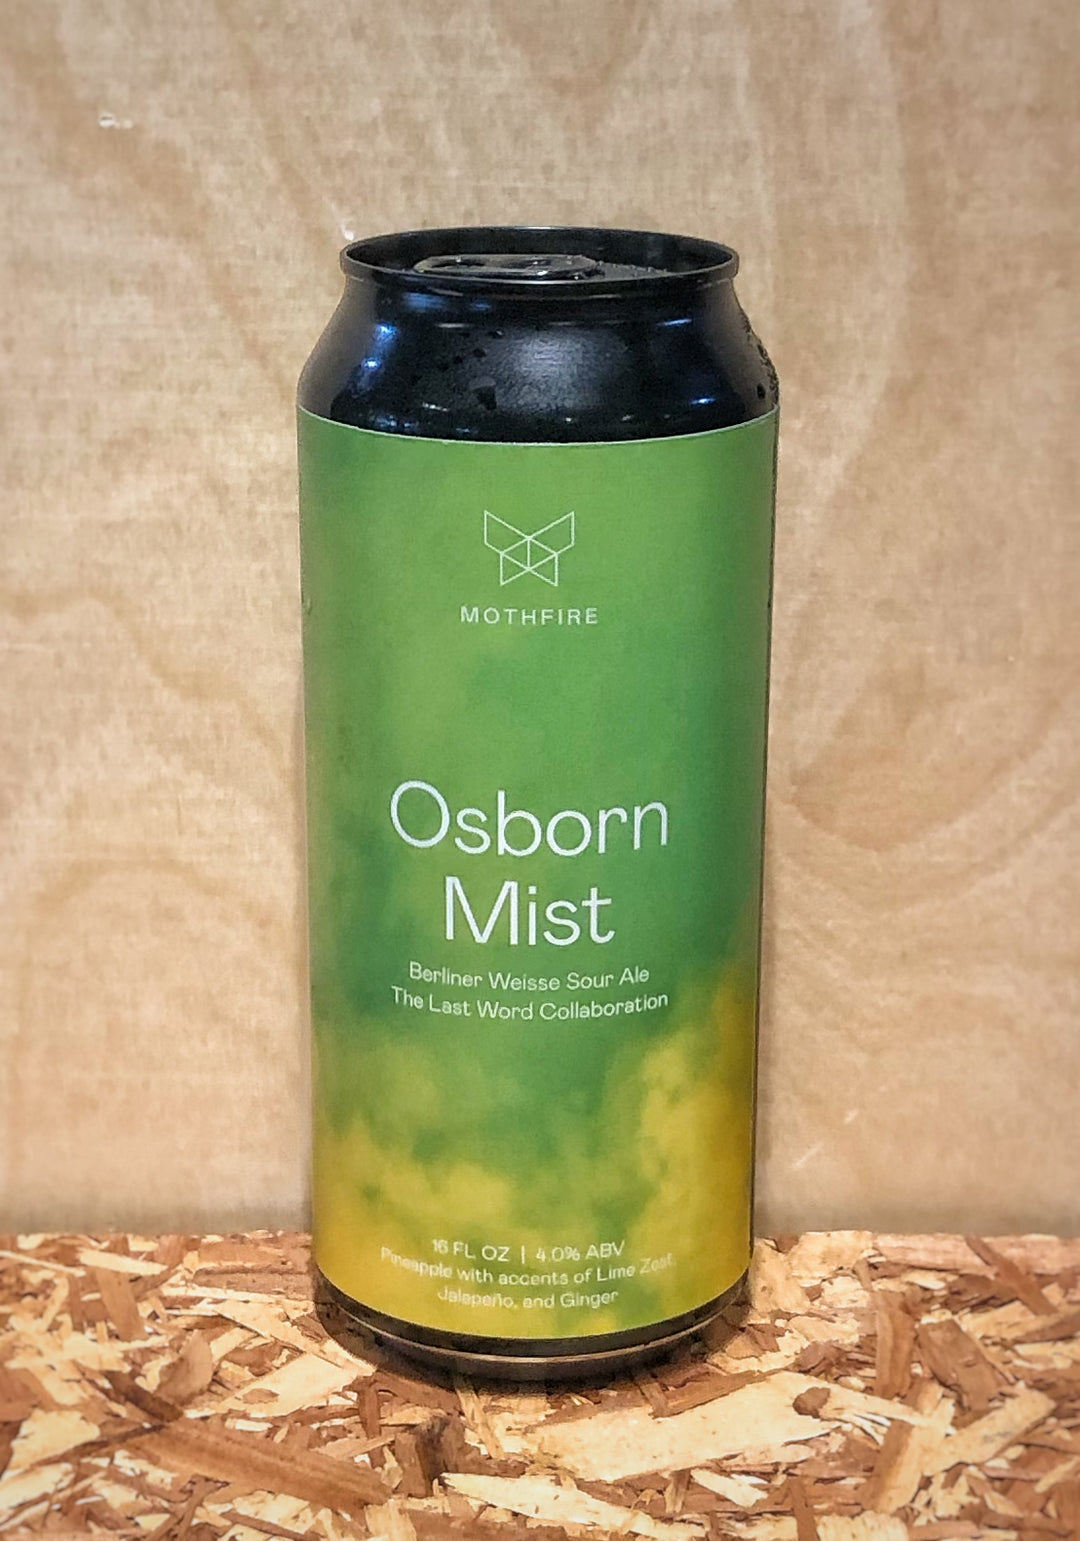 Mothfire Brewing 'Osborn Mist' Berliner Weisse Sour Ale Collaboration with The Last Word (Ann Arbor, MI)